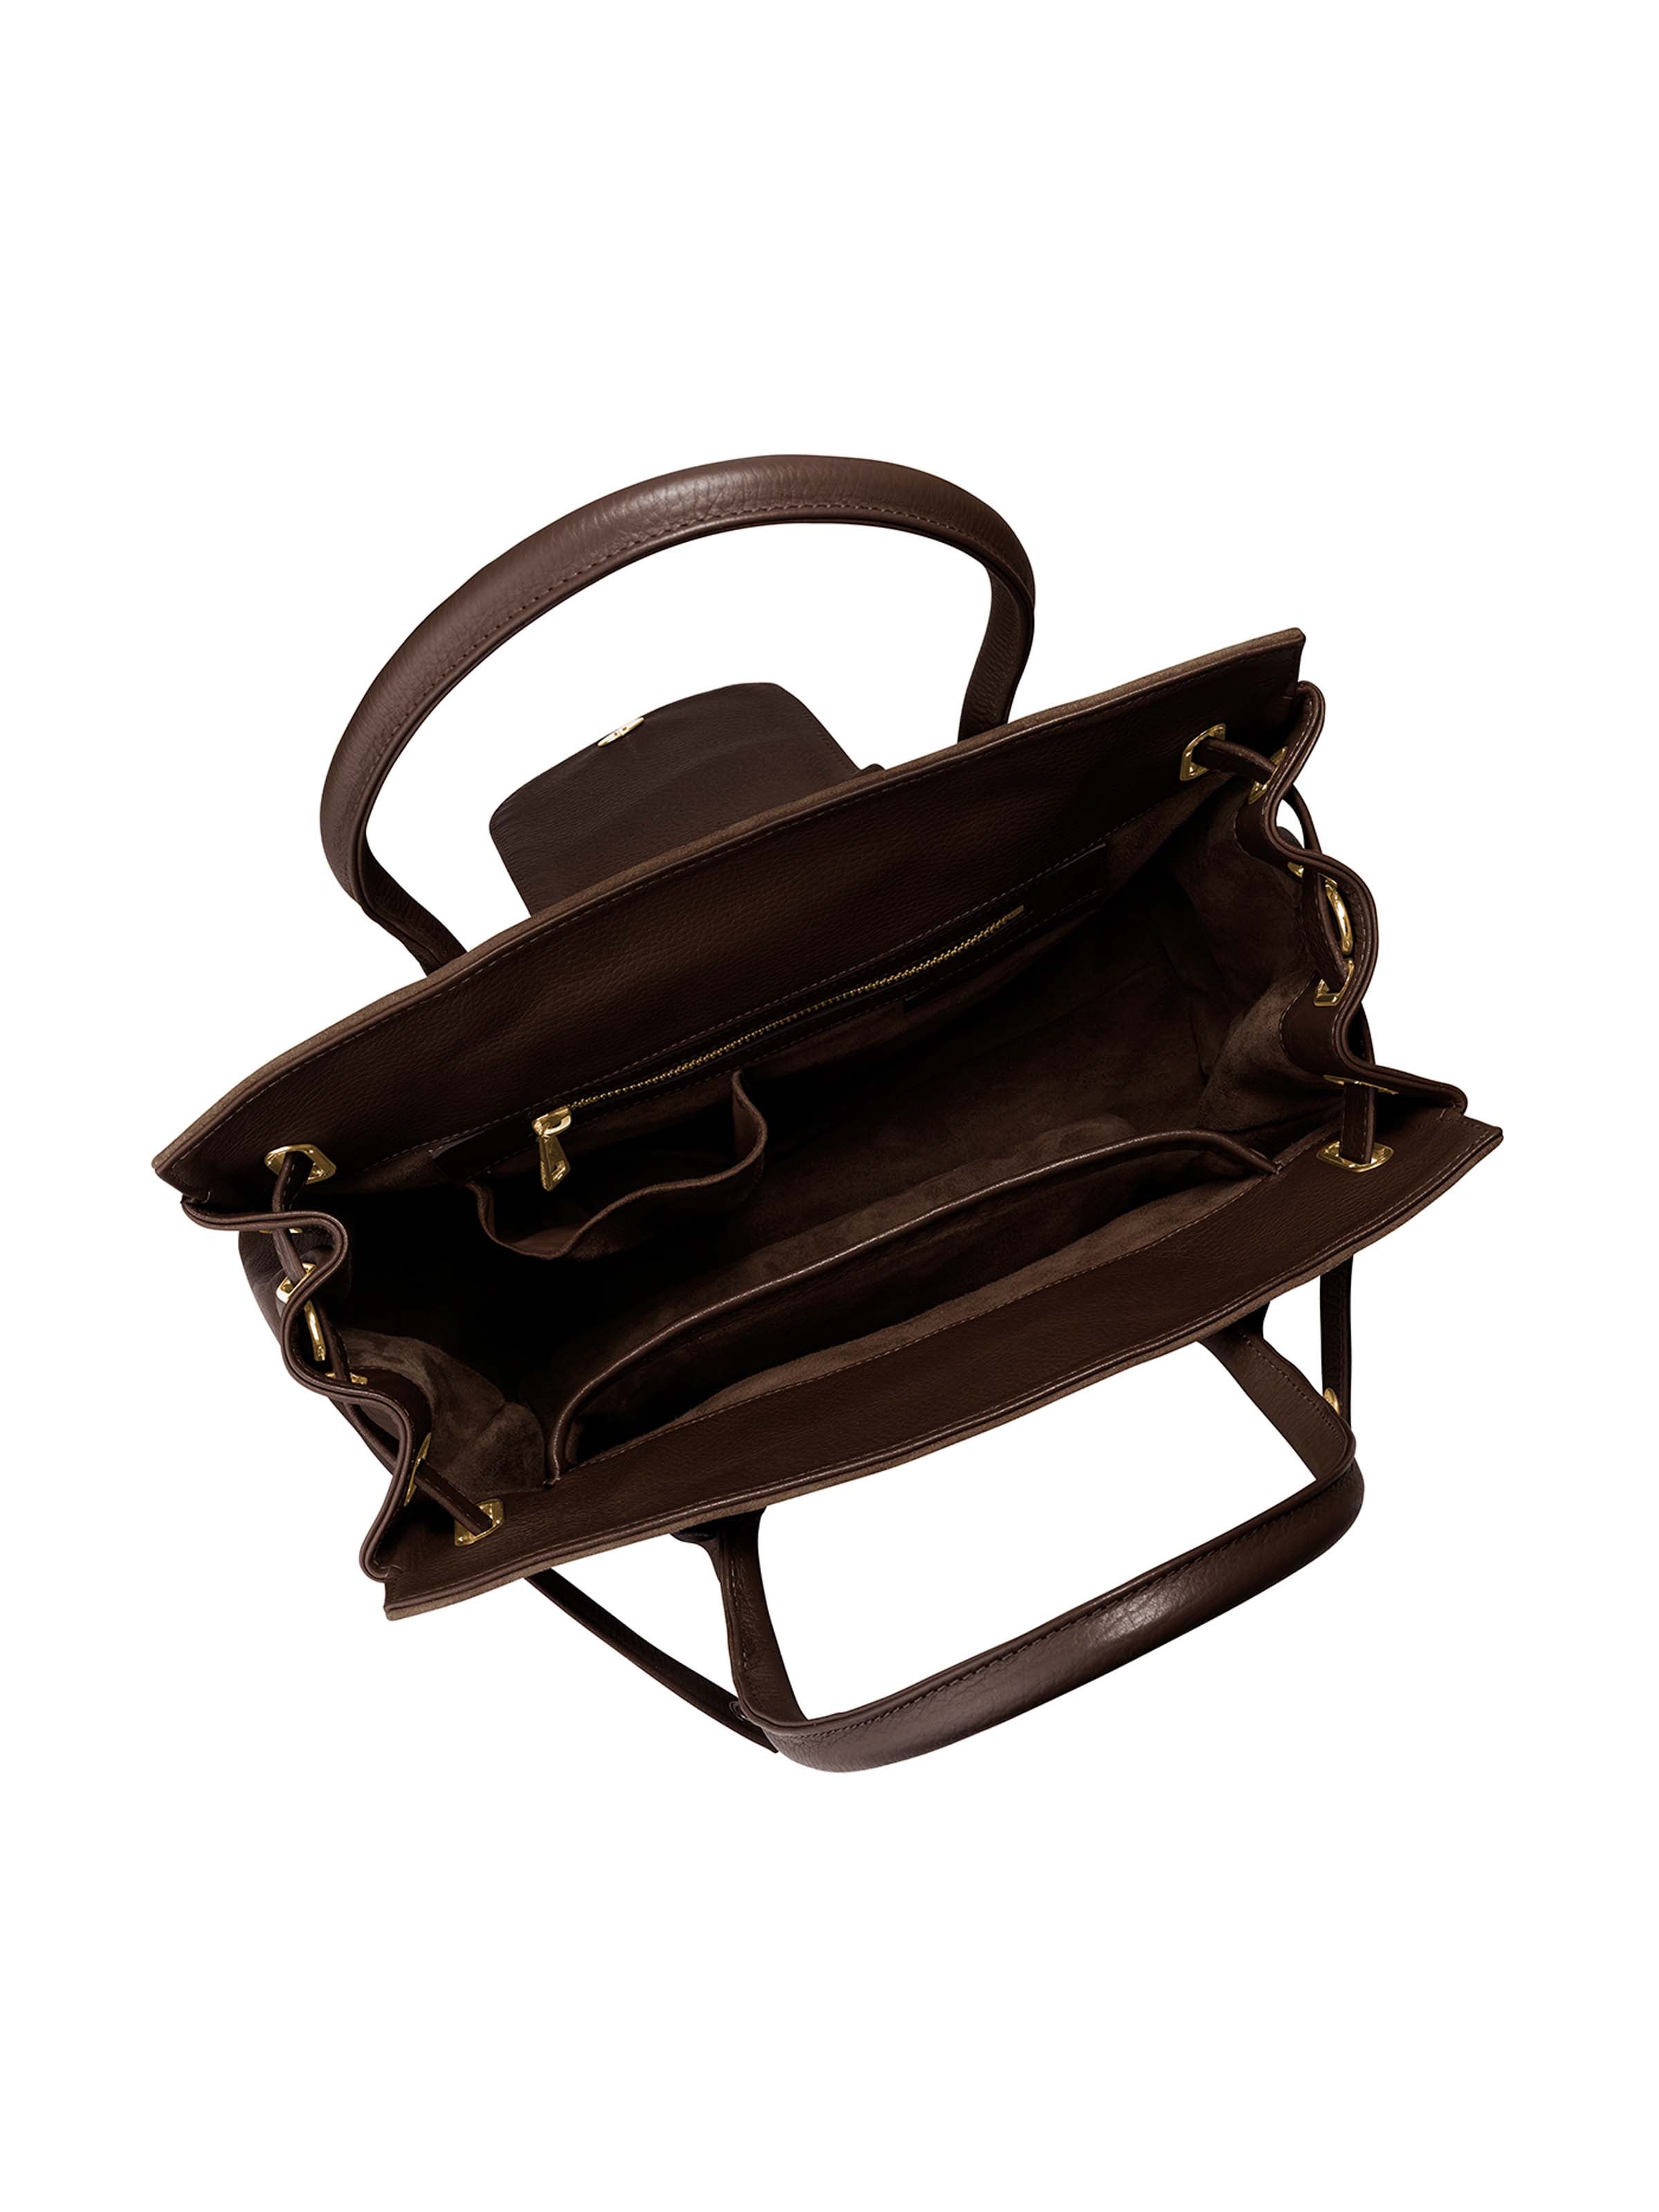 The Windsor Handbag - Chocolate Suede